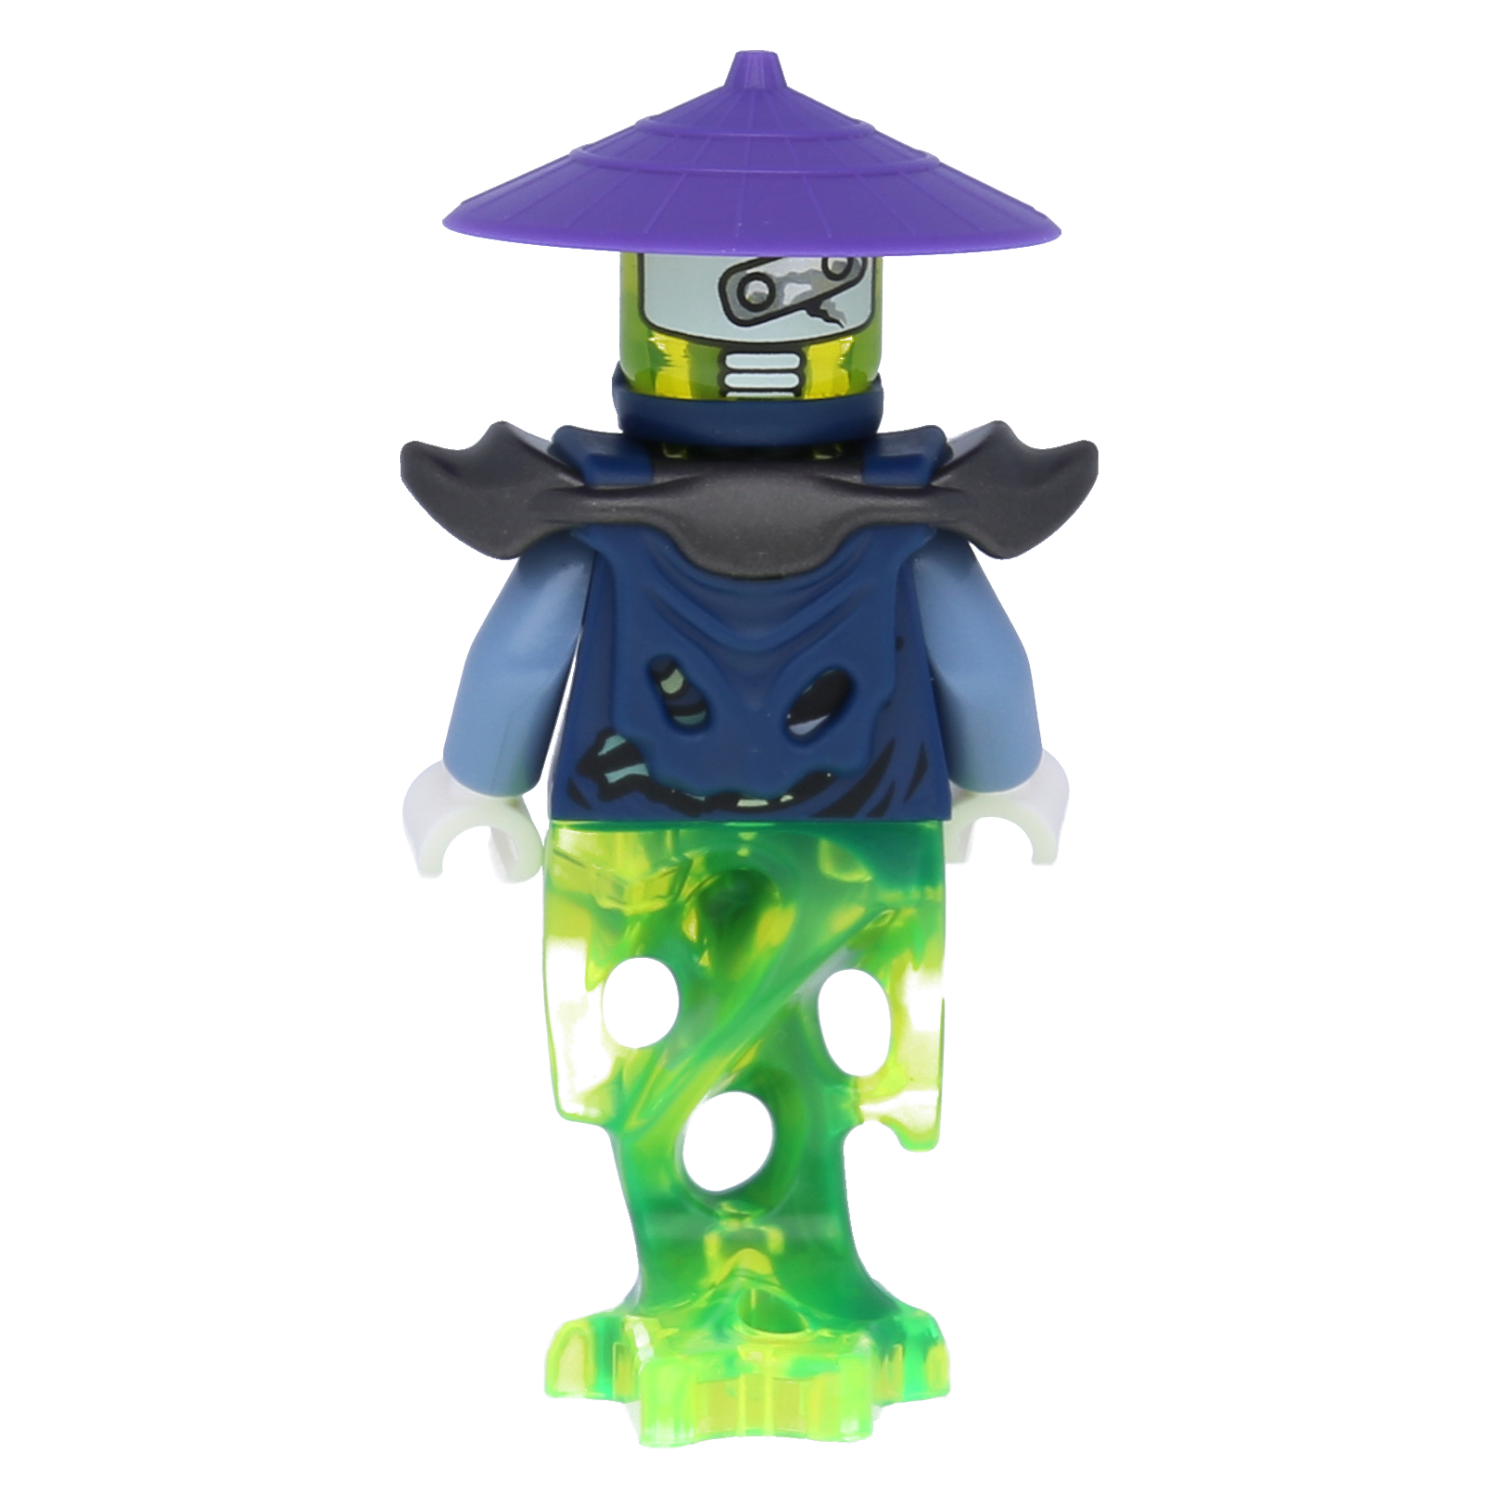 LEGO Ninjago Minifigure - Sensenmeister Ghoultar (Possession)